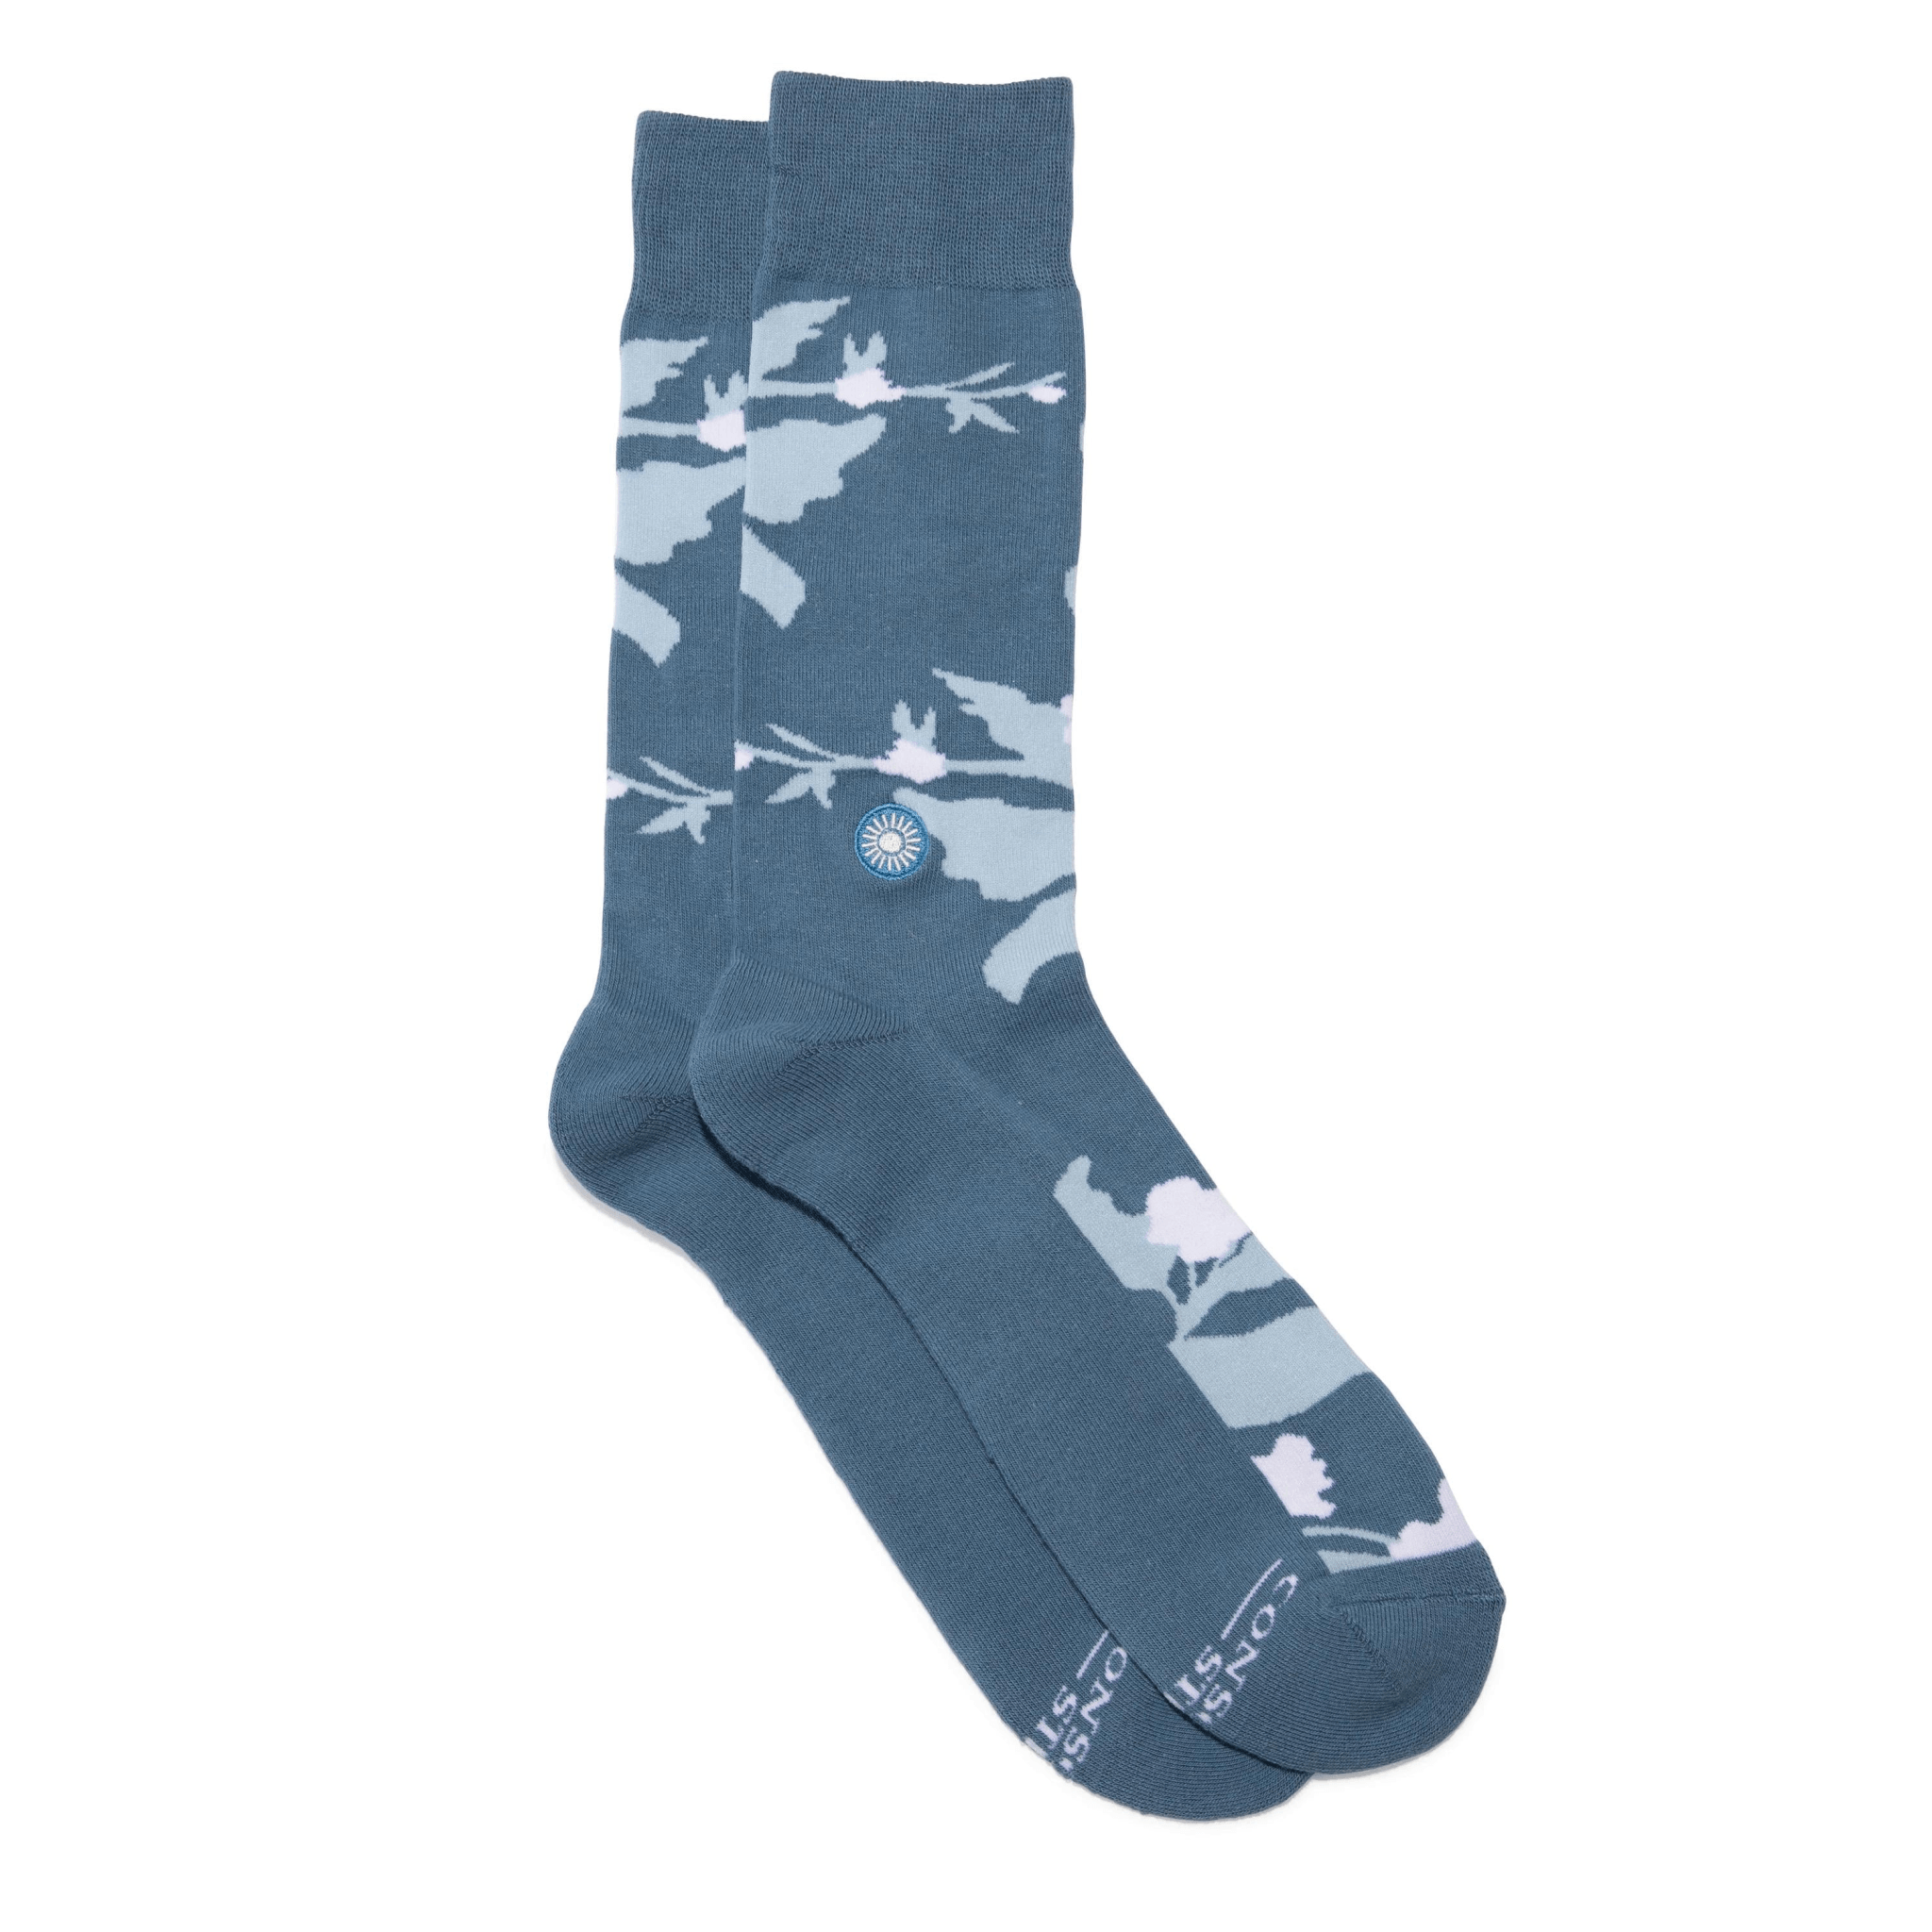 Socks That Support Mental Health - Earth Ahead